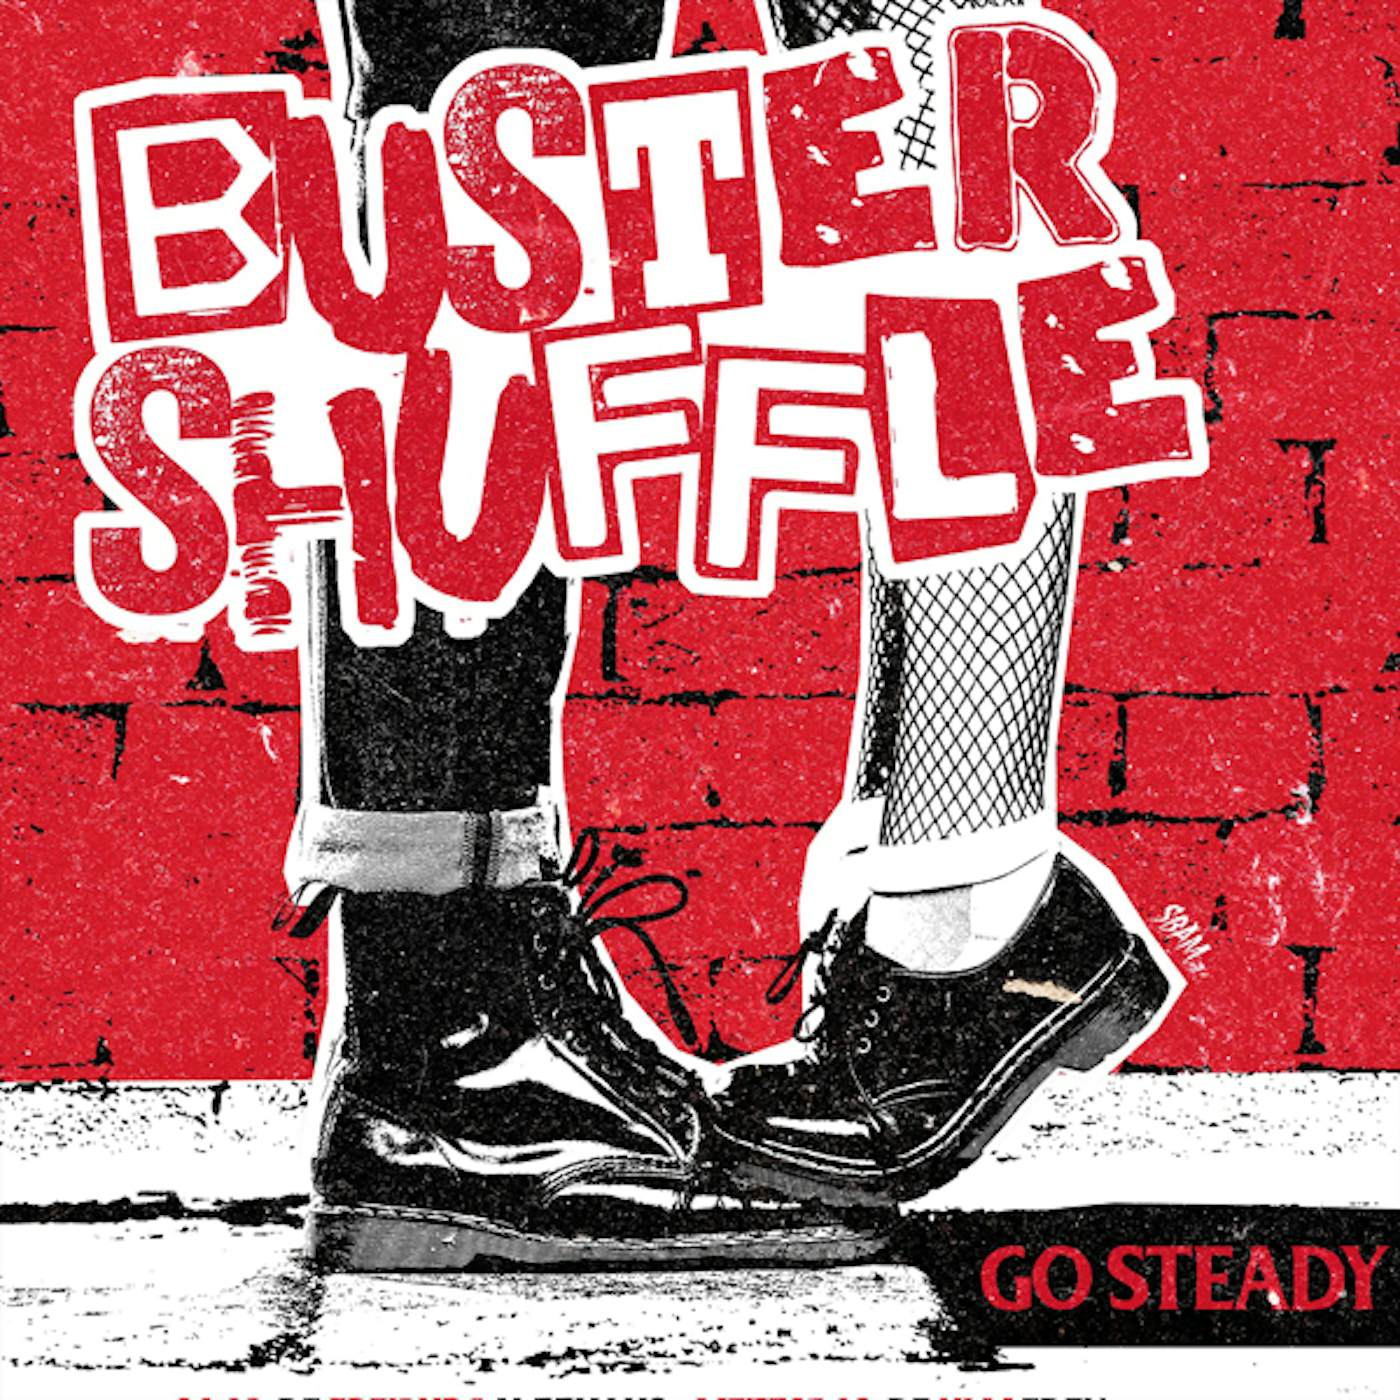 Buster Shuffle Go Steady vinyl record